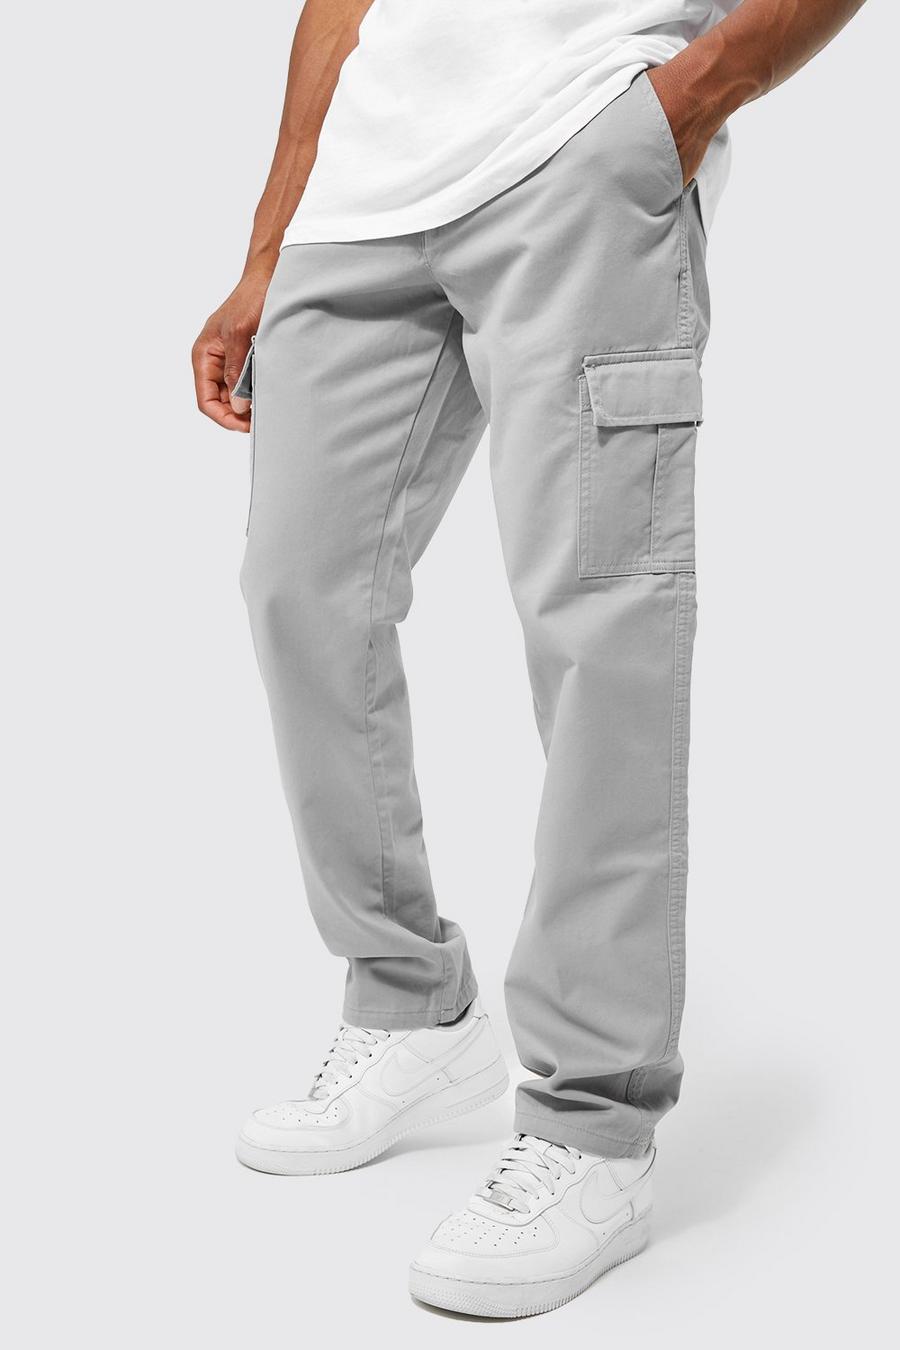 Grey grigio מכנסי דגמ'ח טוויל בגזרה ישרה